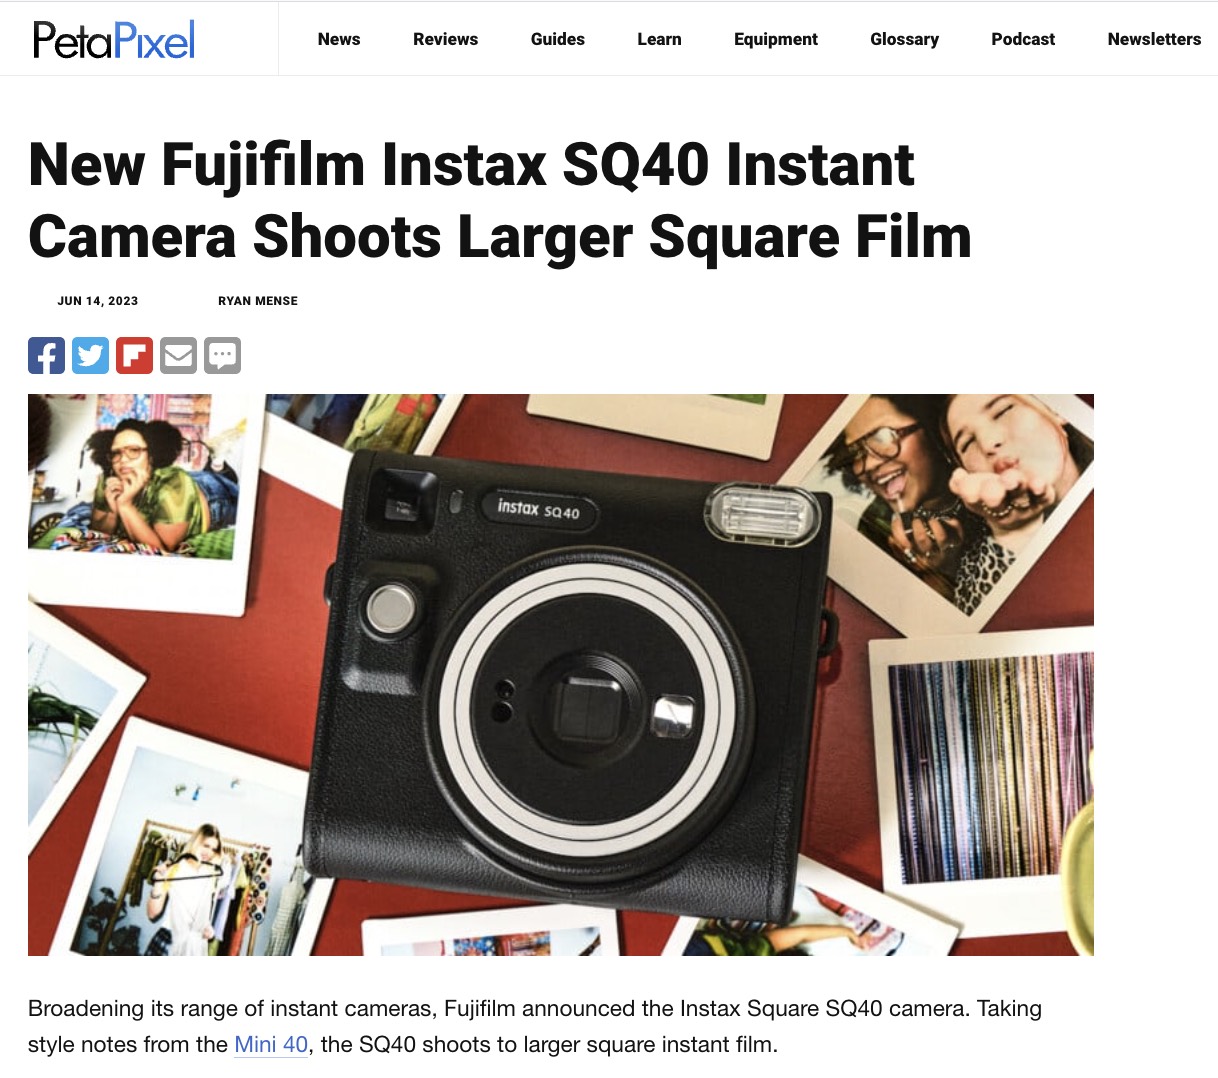 LEAKED: Fujifilm Instax Square SQ40 Press Release and Image - Fuji Rumors